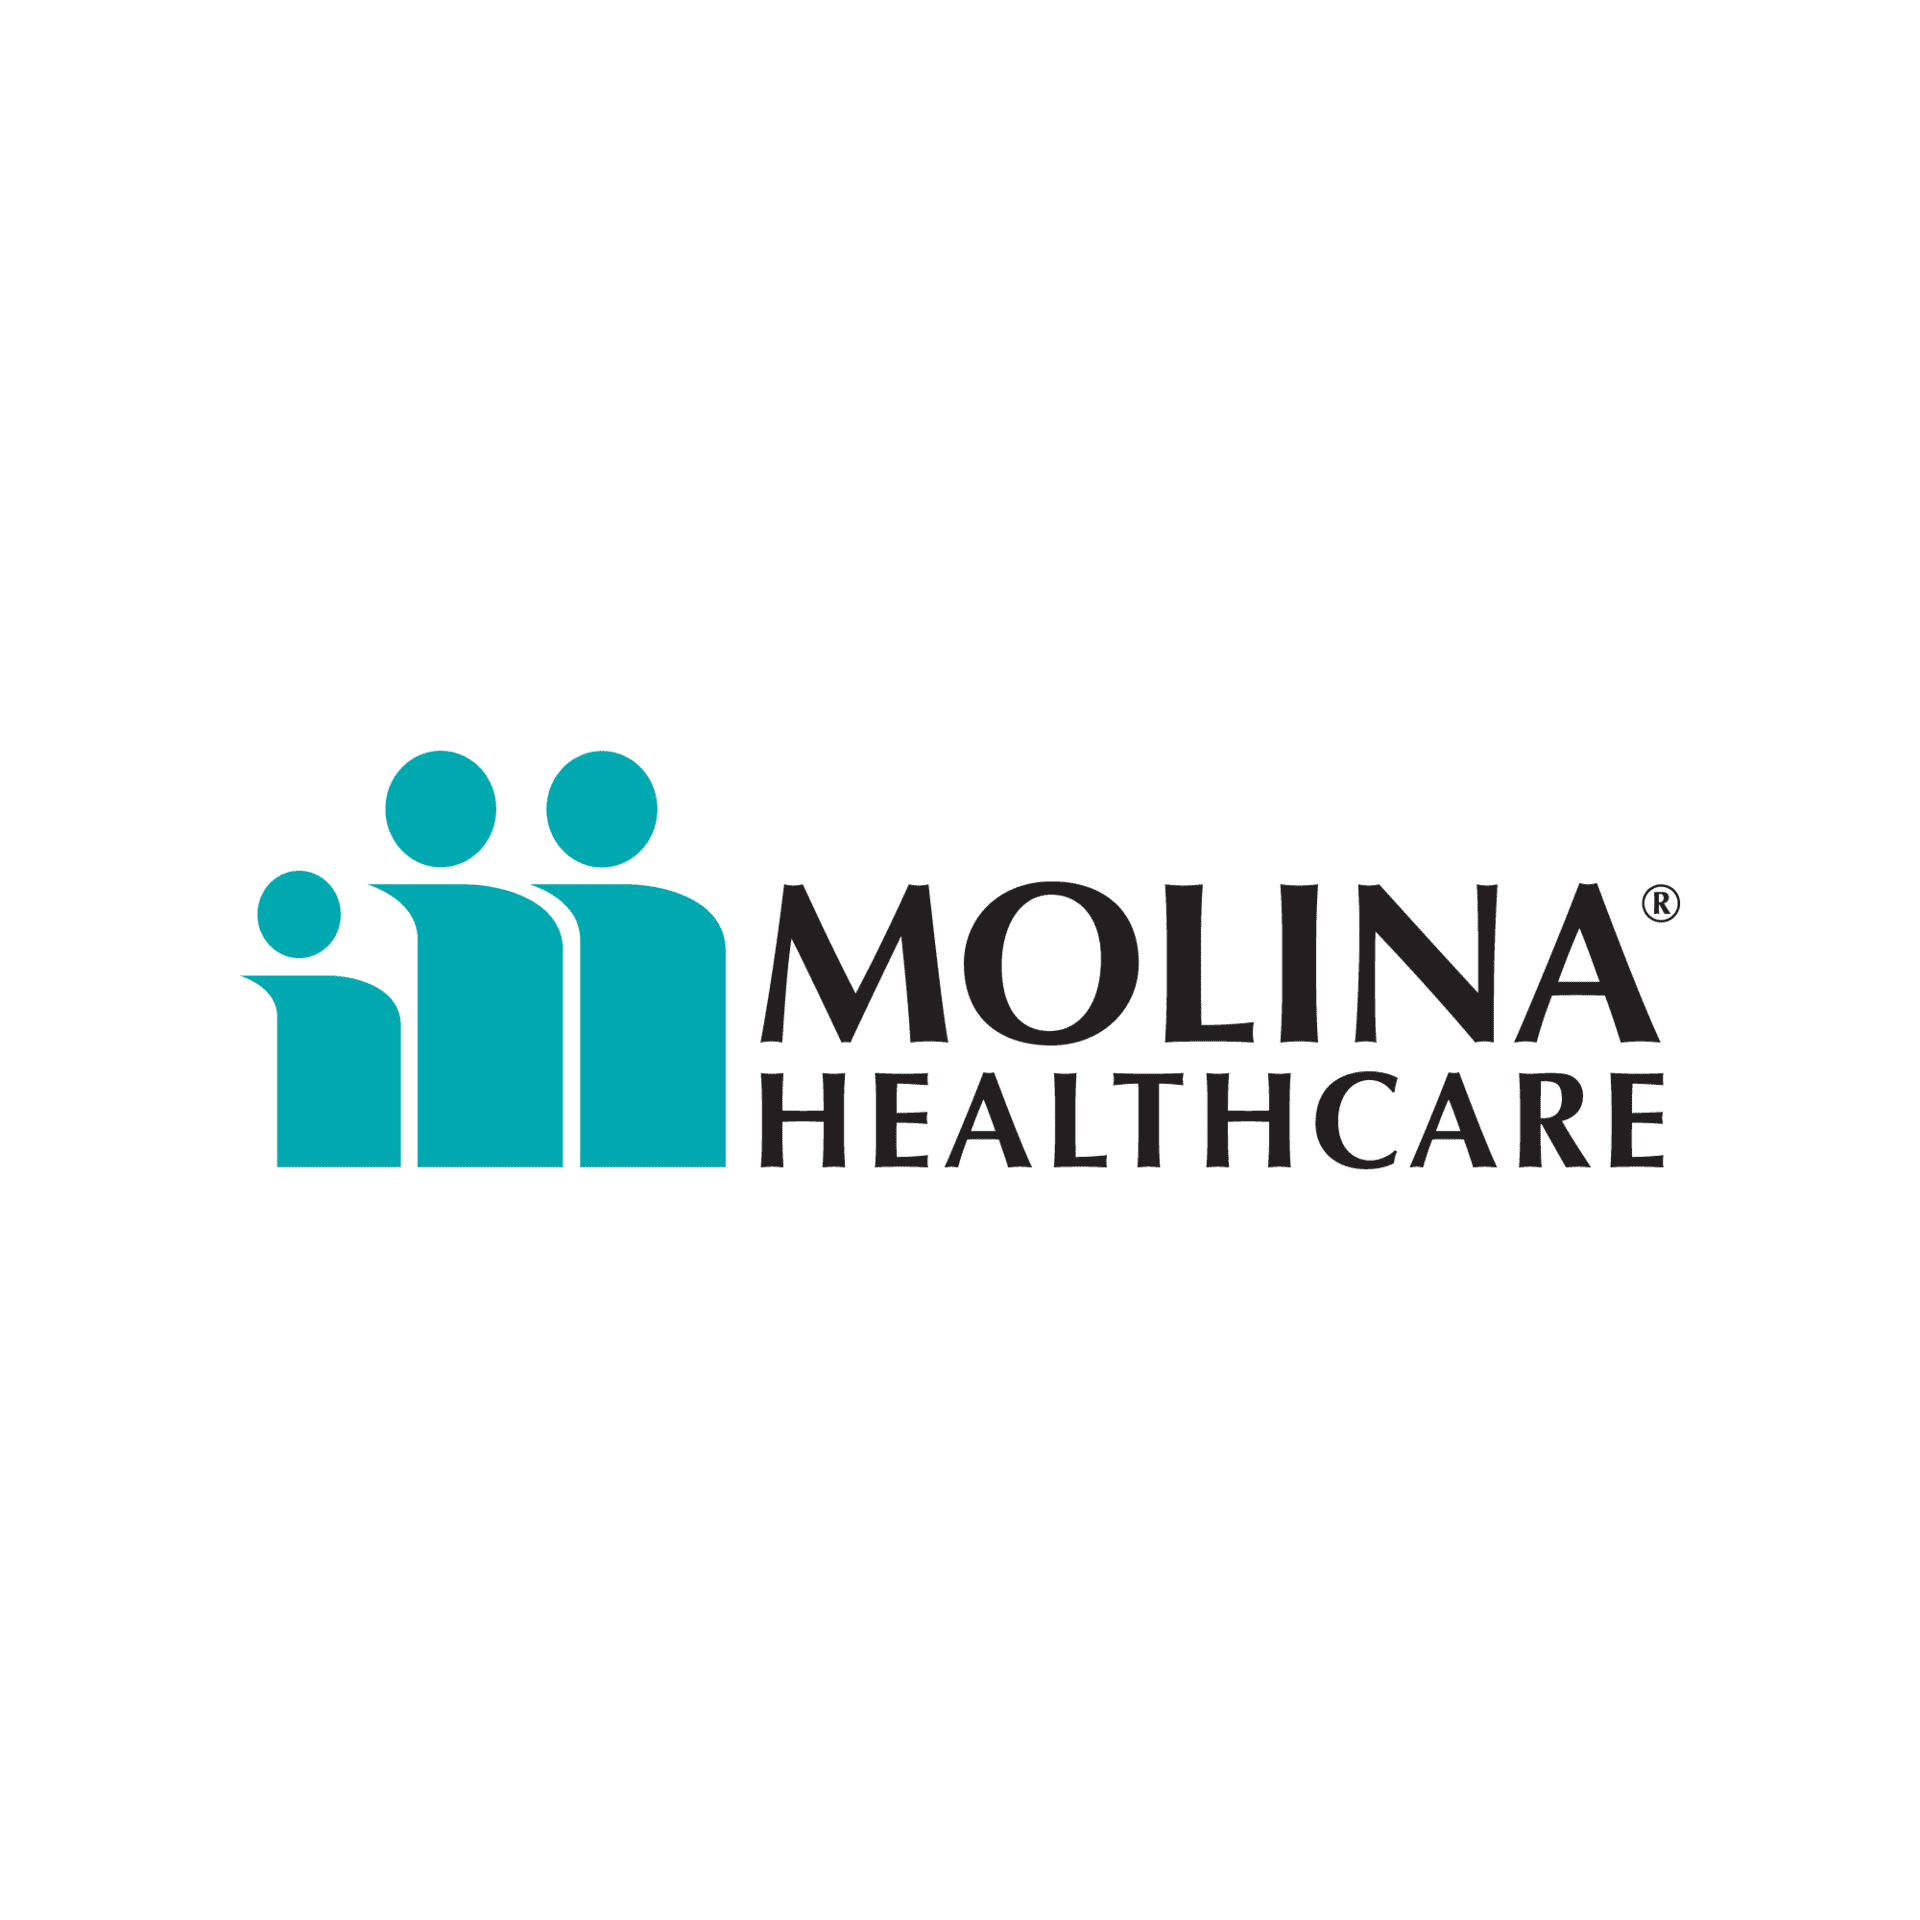 Molina healthcare logo on a white background.